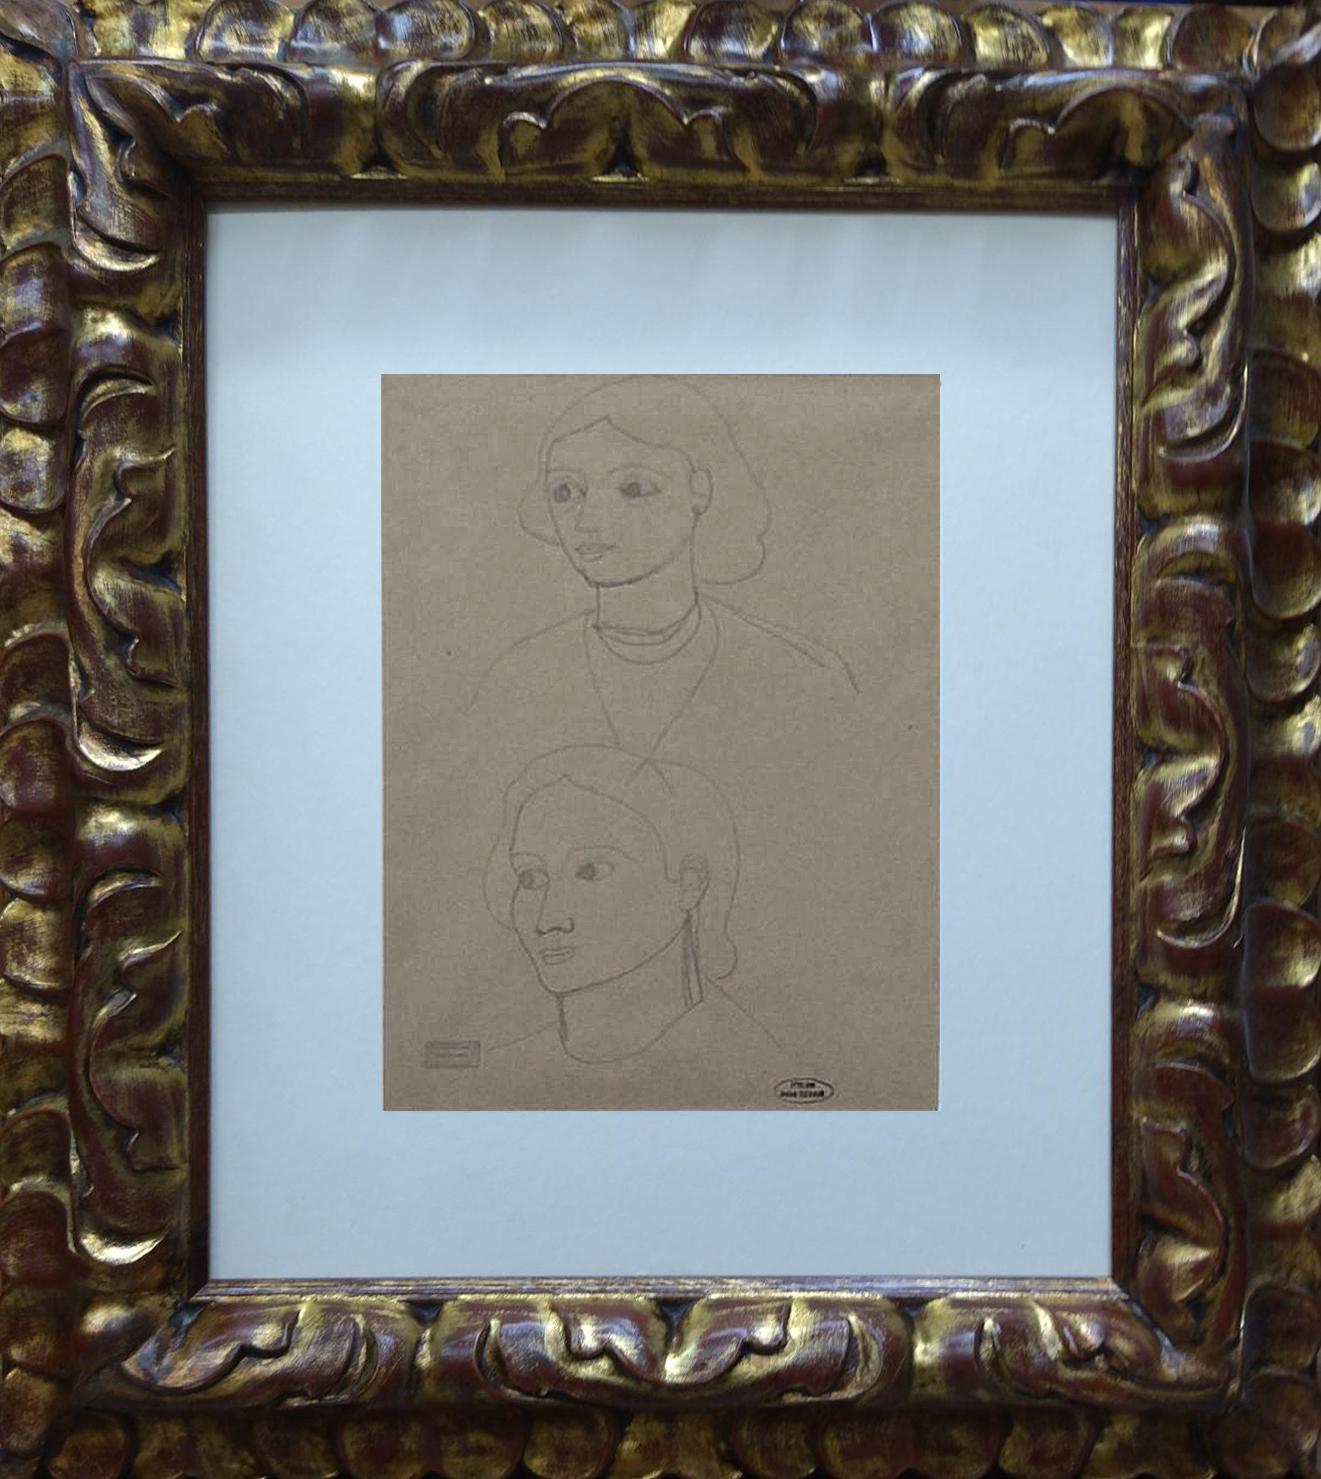 Figurative Painting André Derain - Andre Derain 94 Sketch of Faces, dessin original au crayon